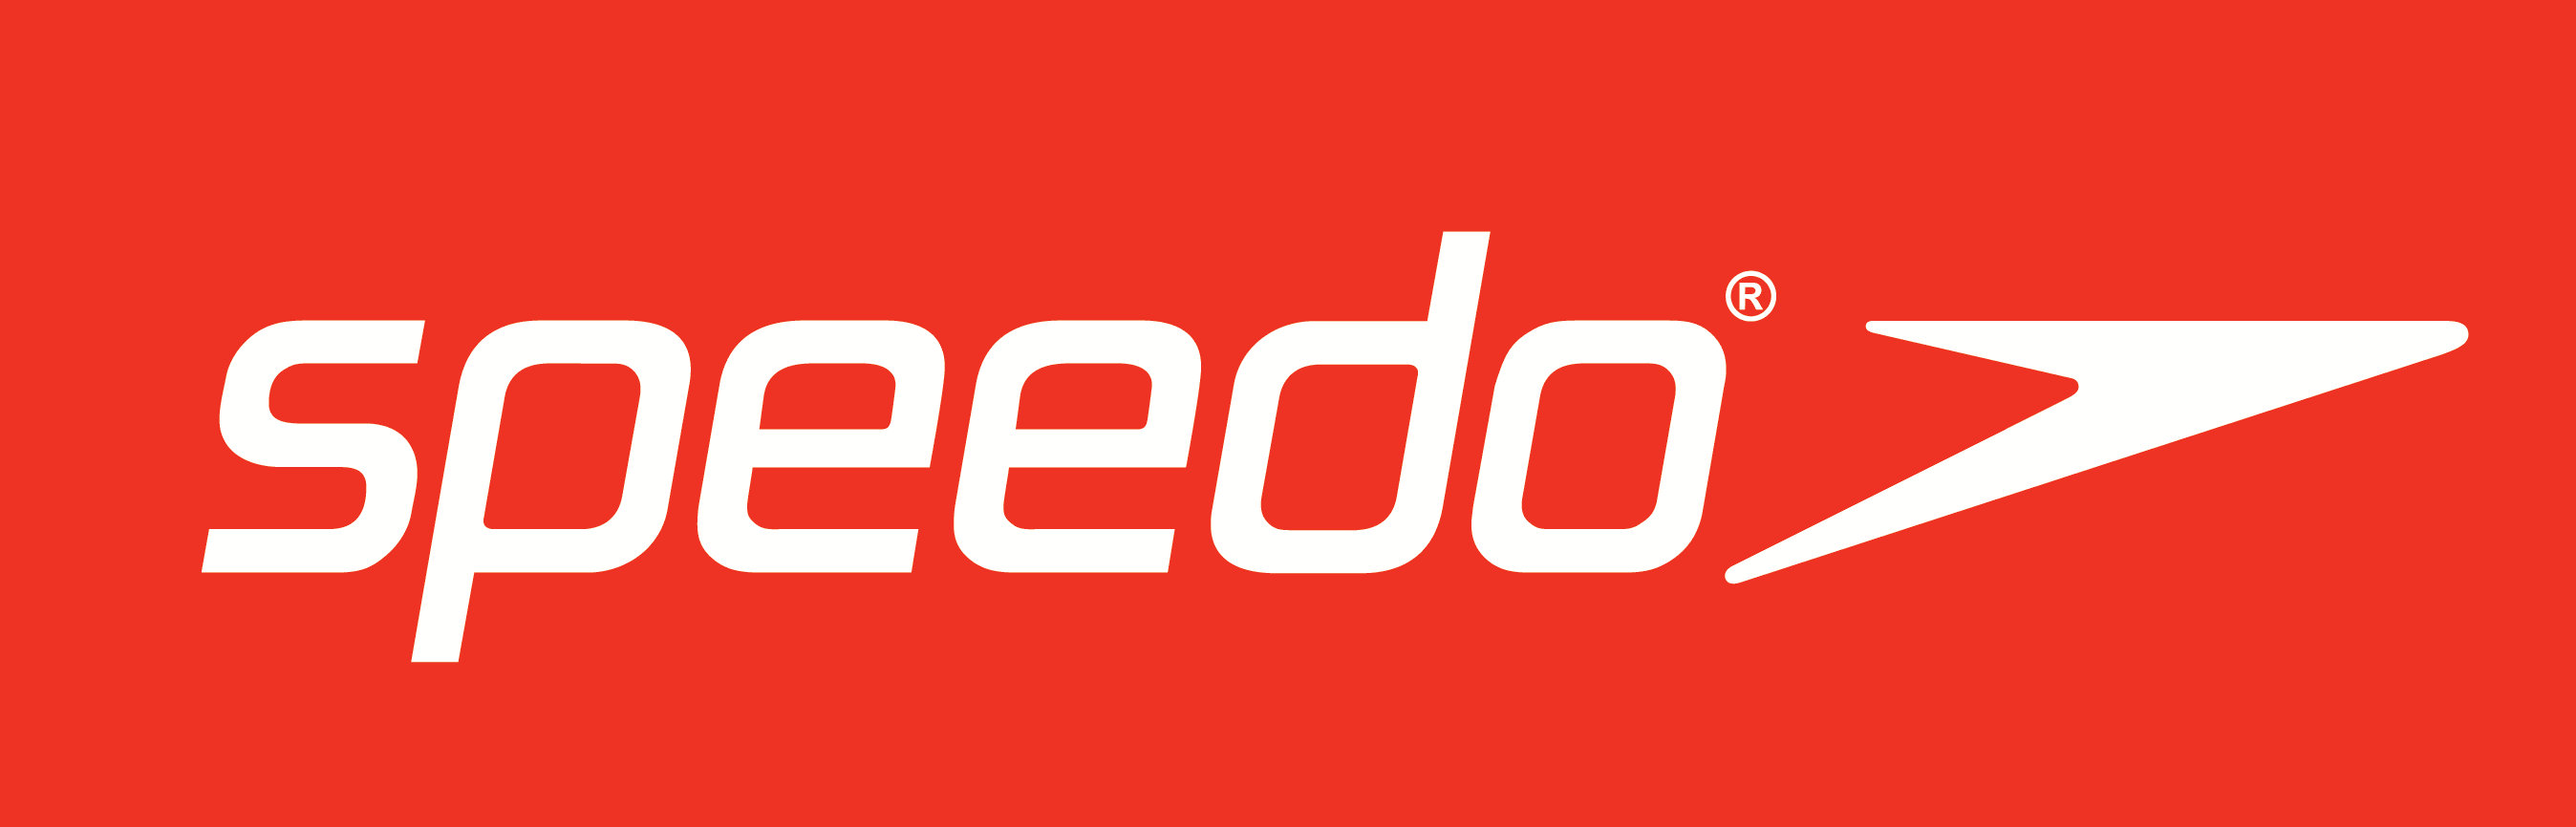 Speedo – Logos Download